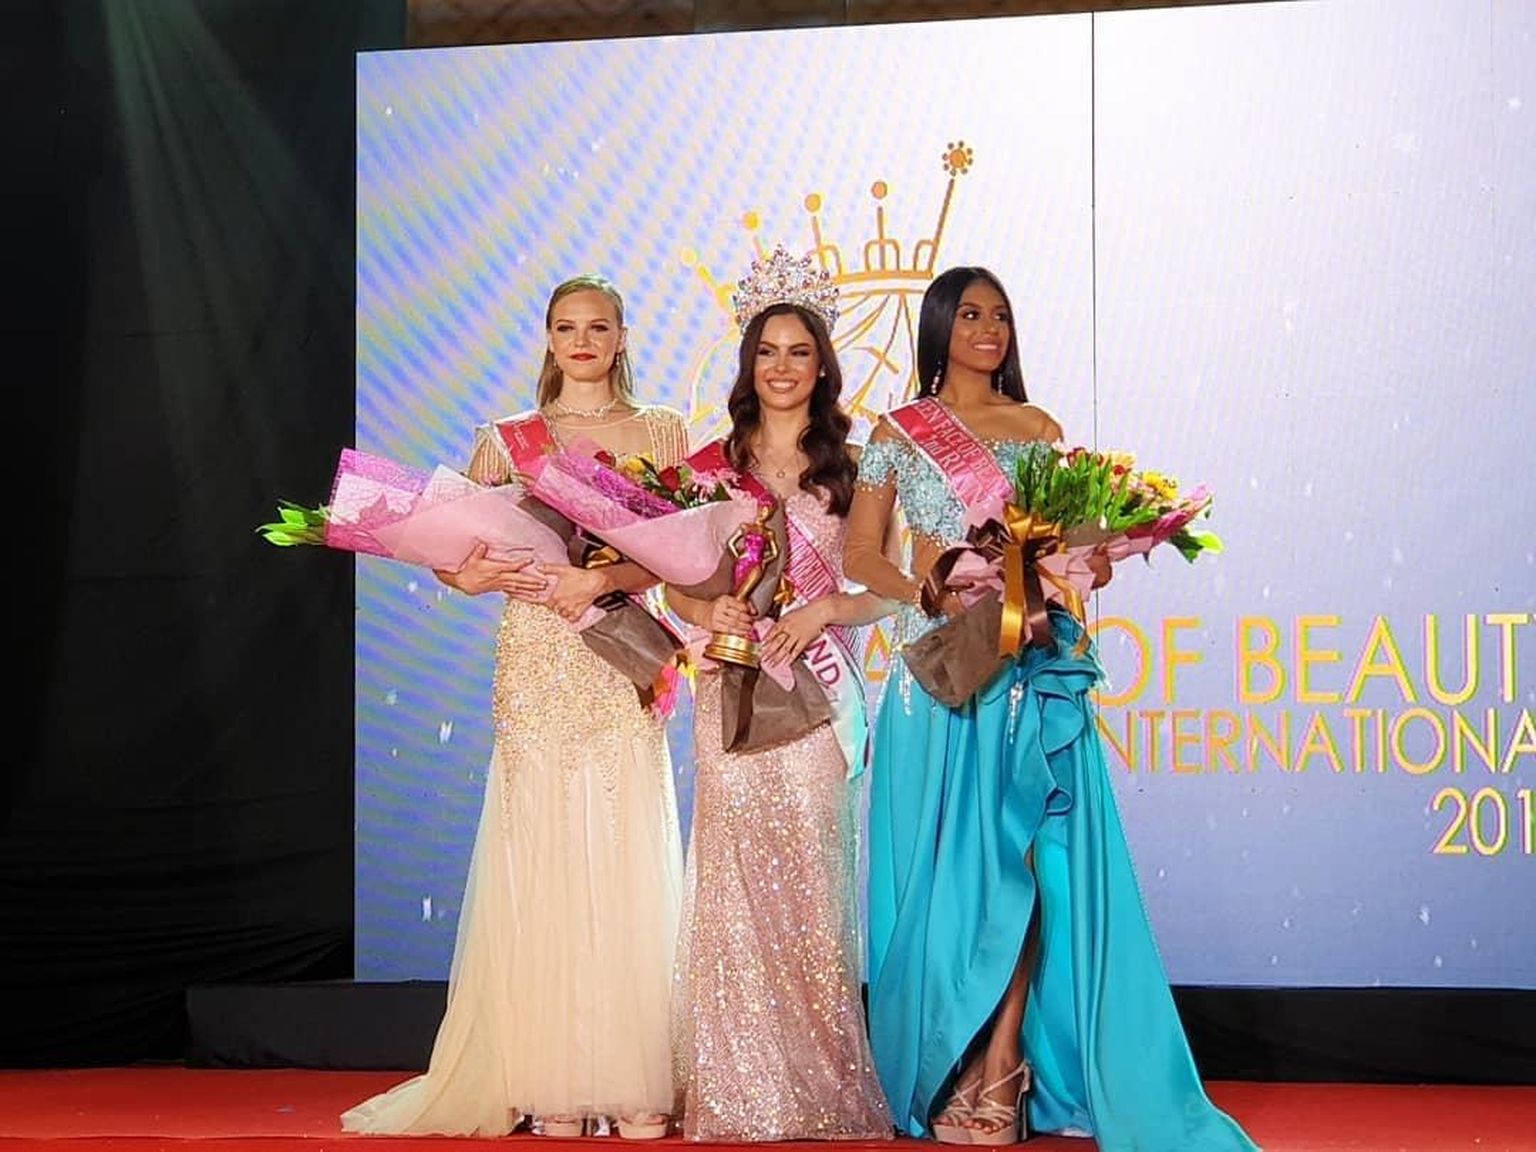 Teen Face of Beauty Internationali võitjad (Adriana Mass vasakul).